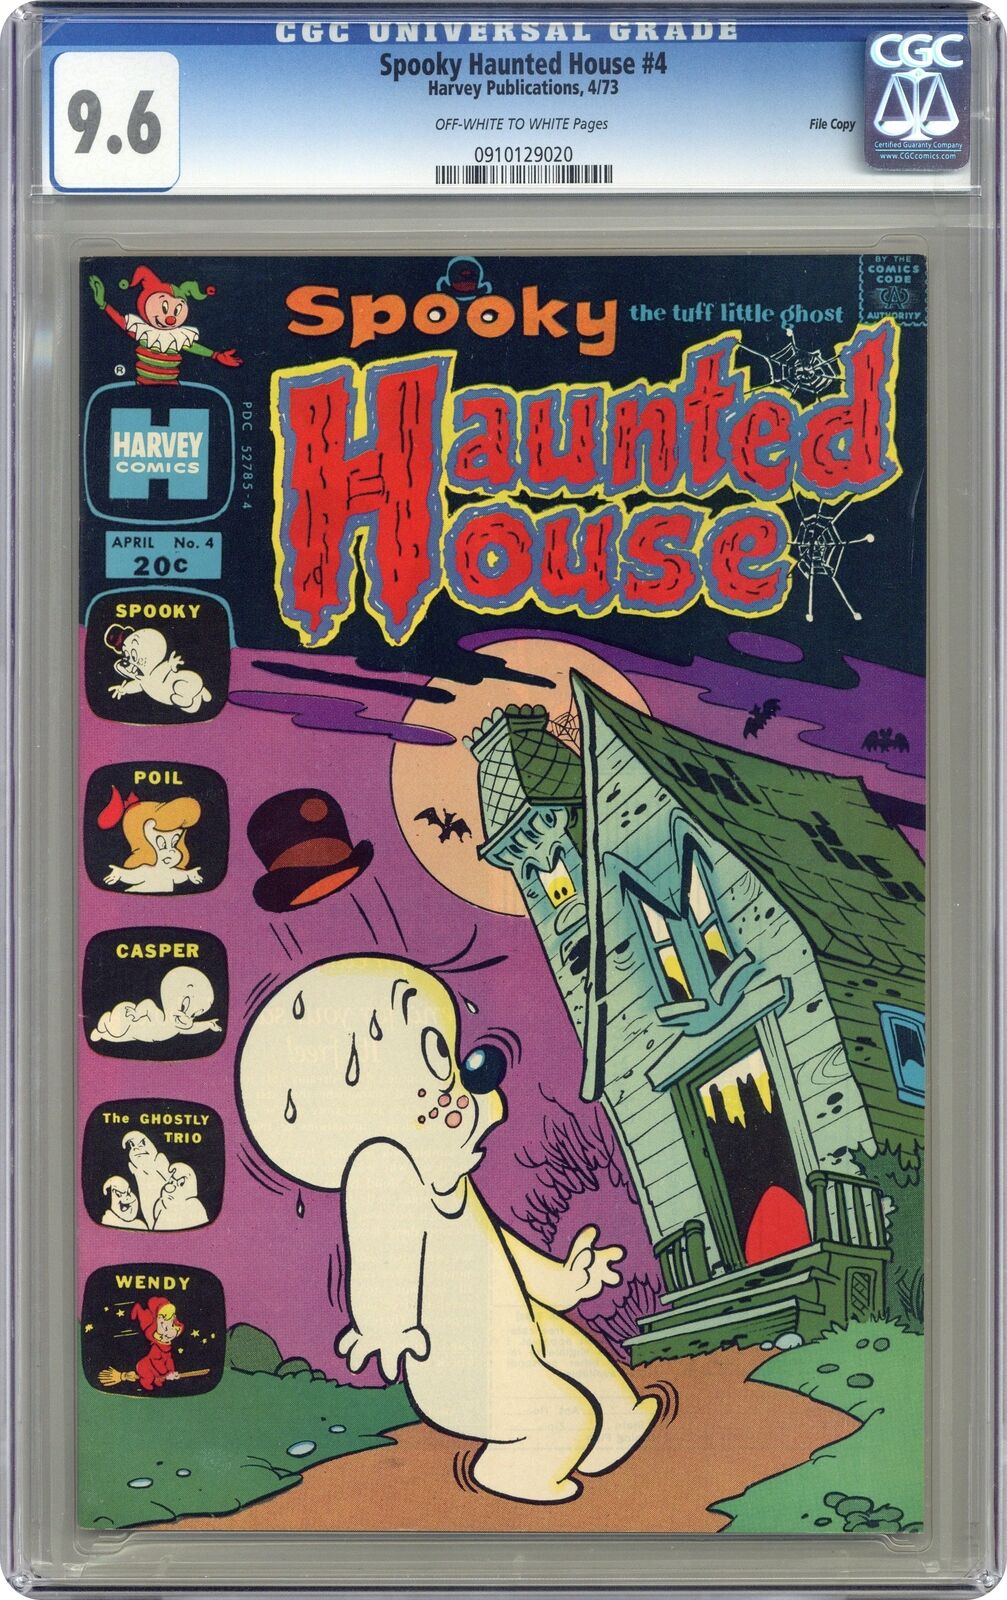 Spooky Haunted House #4 CGC 9.6 1973 0910129020